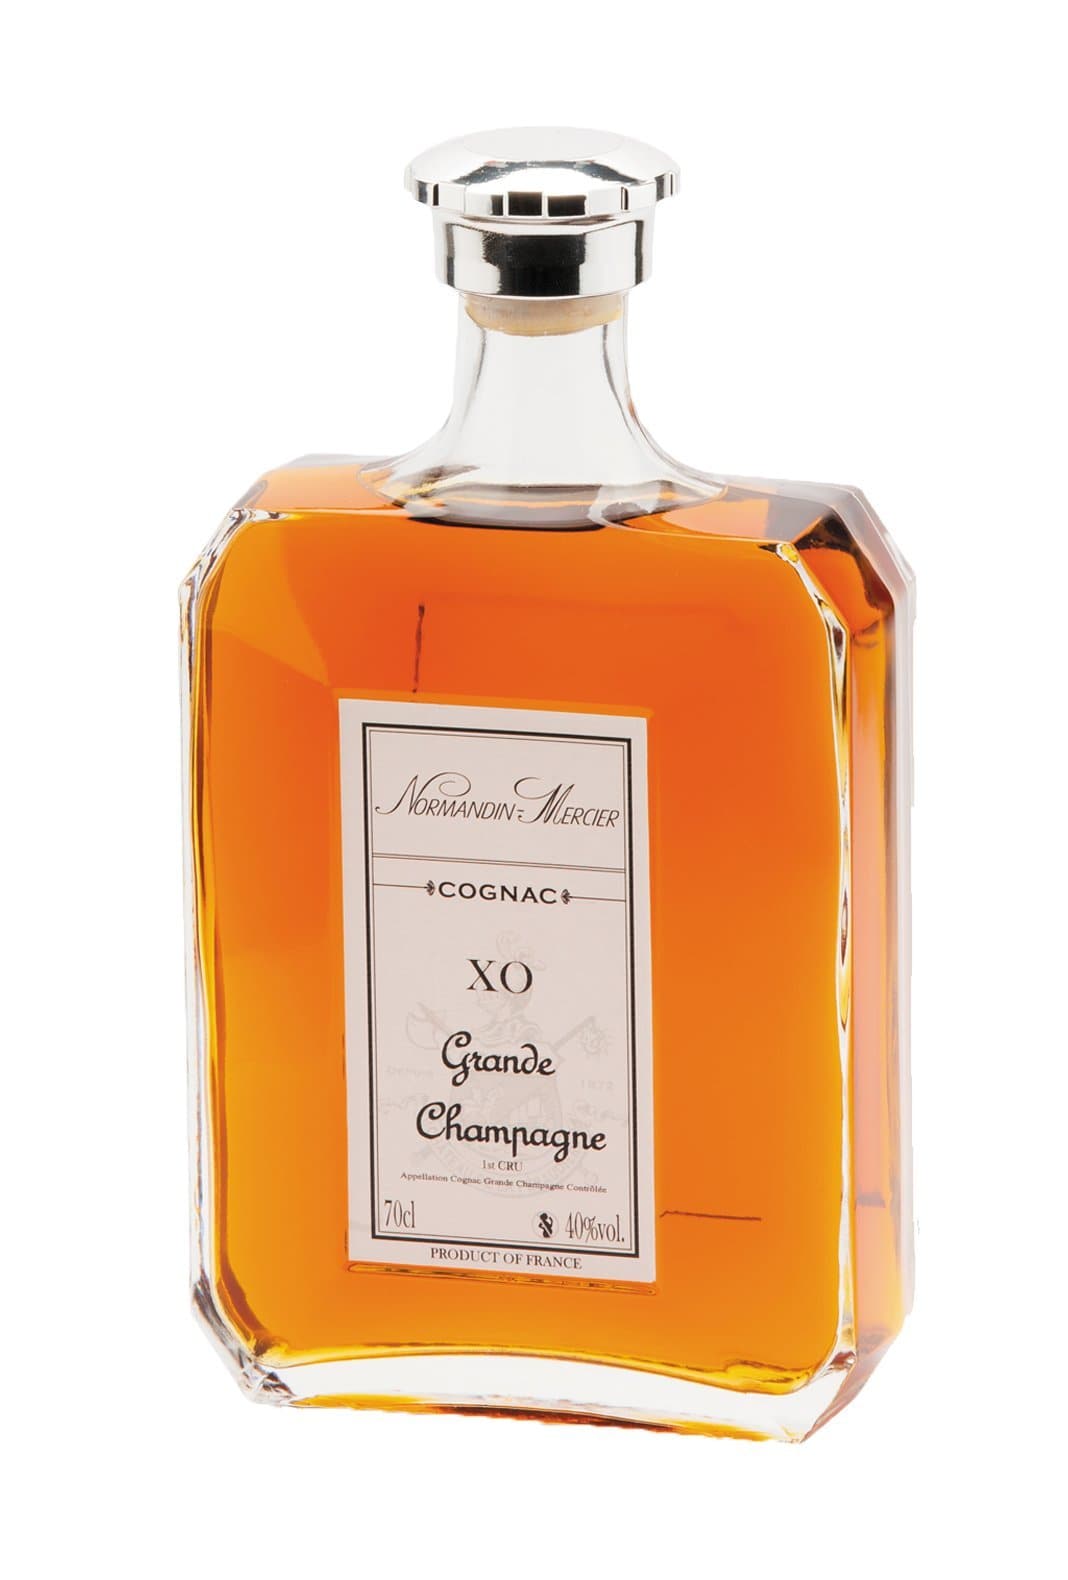 Normandin-Mercier Cognac XO 30 years Grande Champagne Carafe 40% 700ml | Brandy | Shop online at Spirits of France